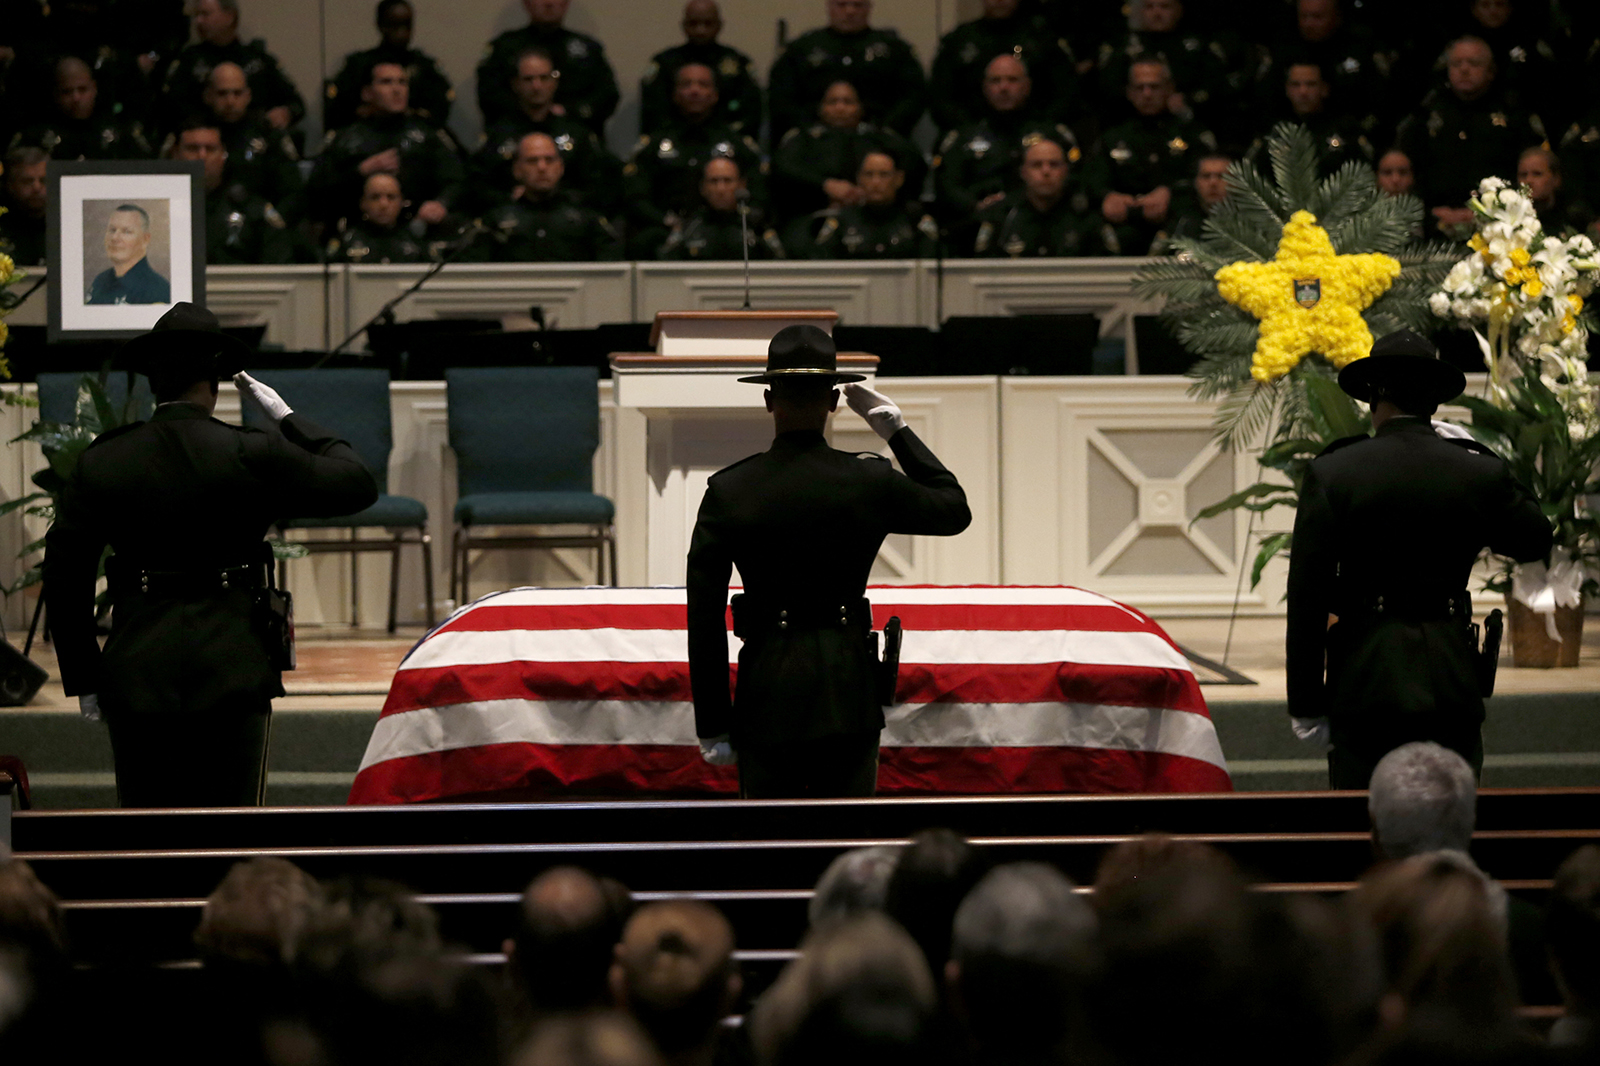 Deputy Smith Funeral